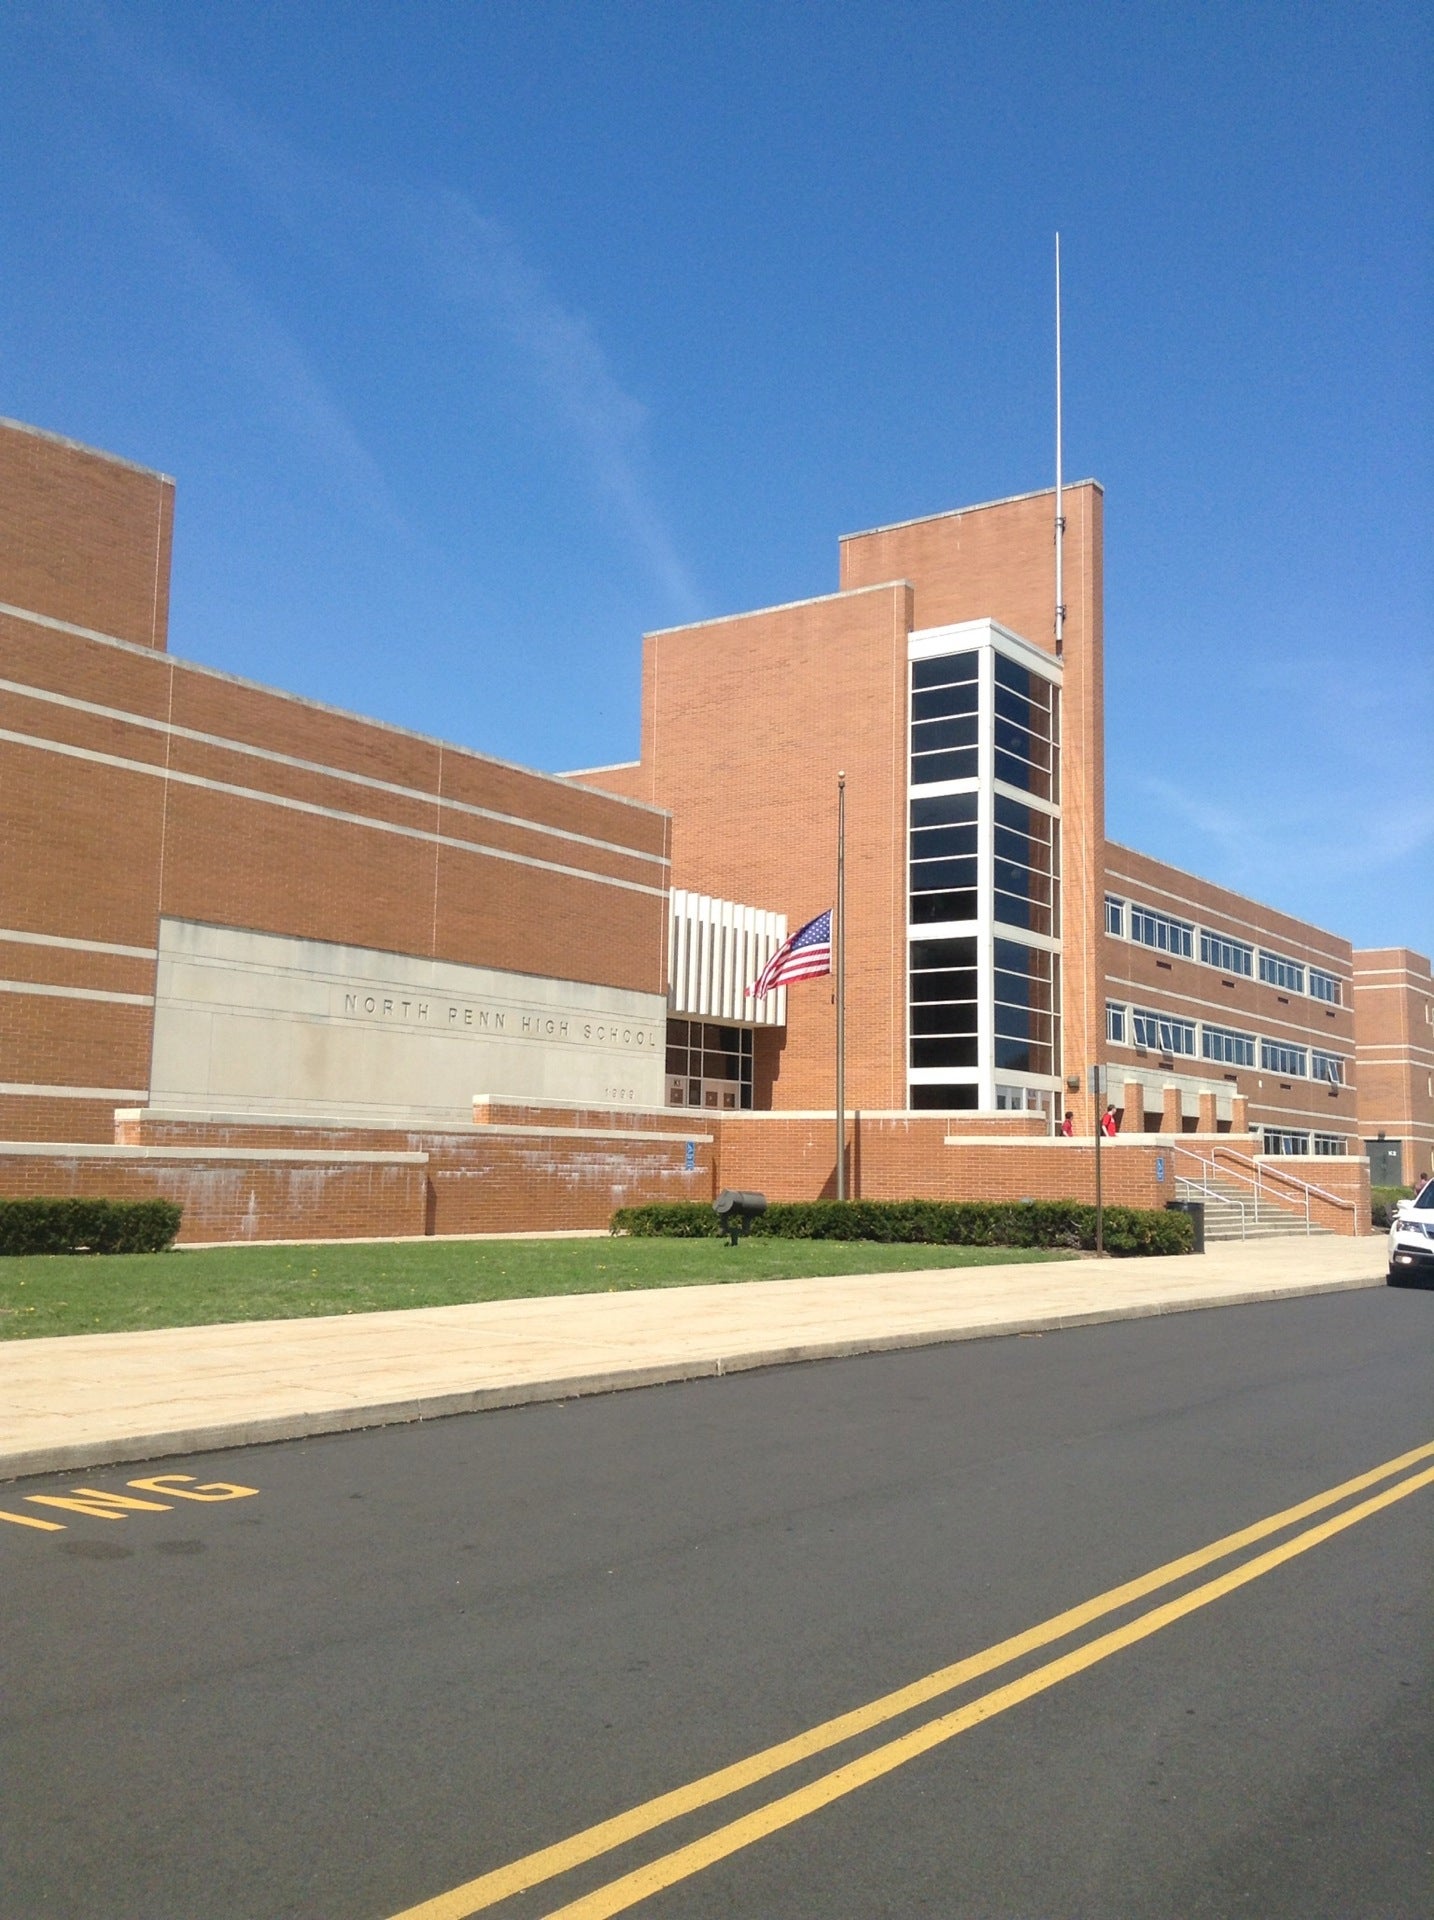 North Penn Senior High School, 1340 S Valley Rd, Lansdale, PA